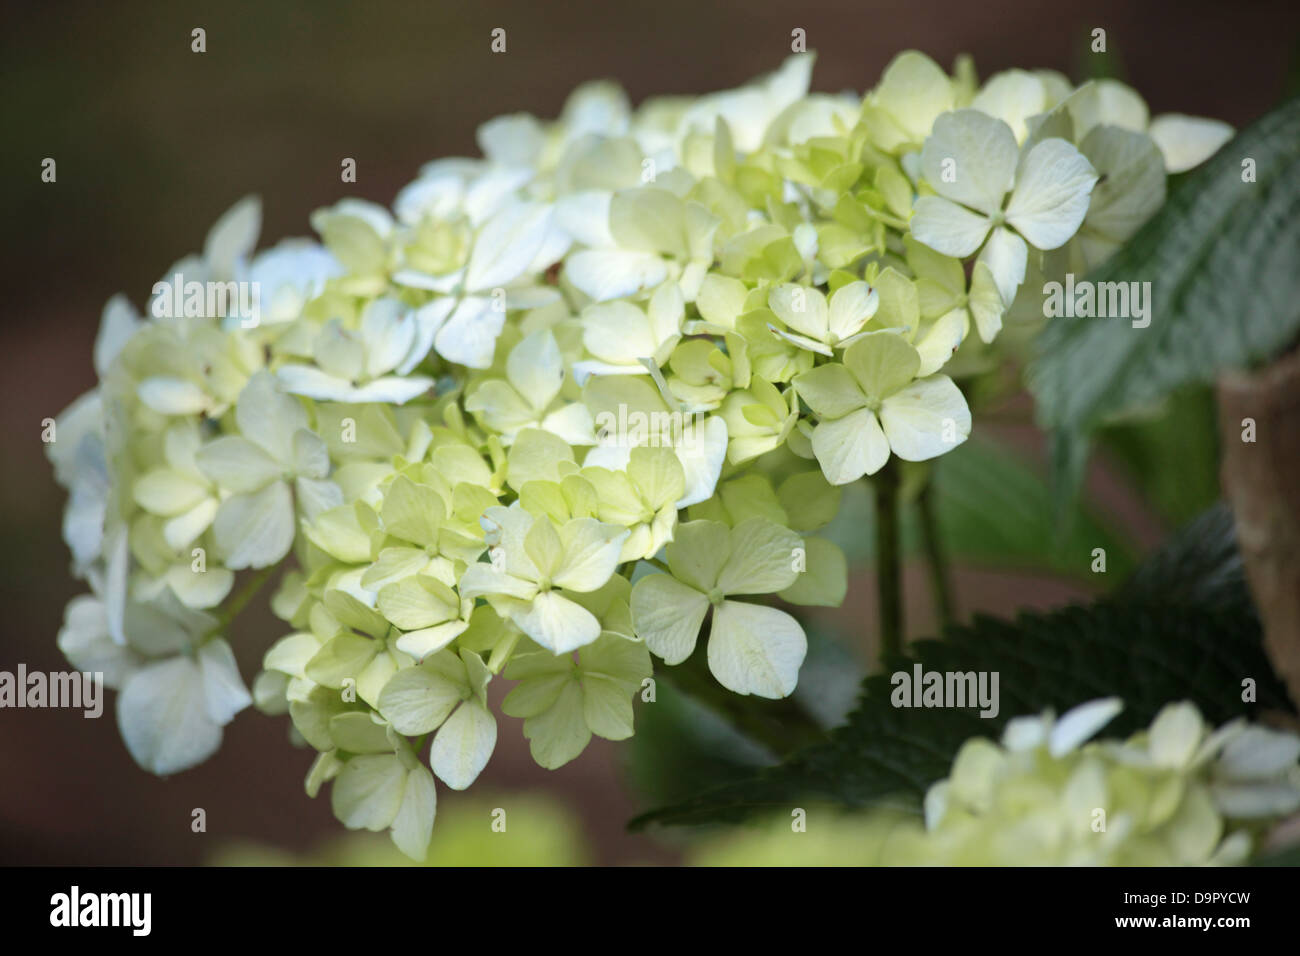 bunch of hydrangea or mop head flowers Stock Photo - Alamy